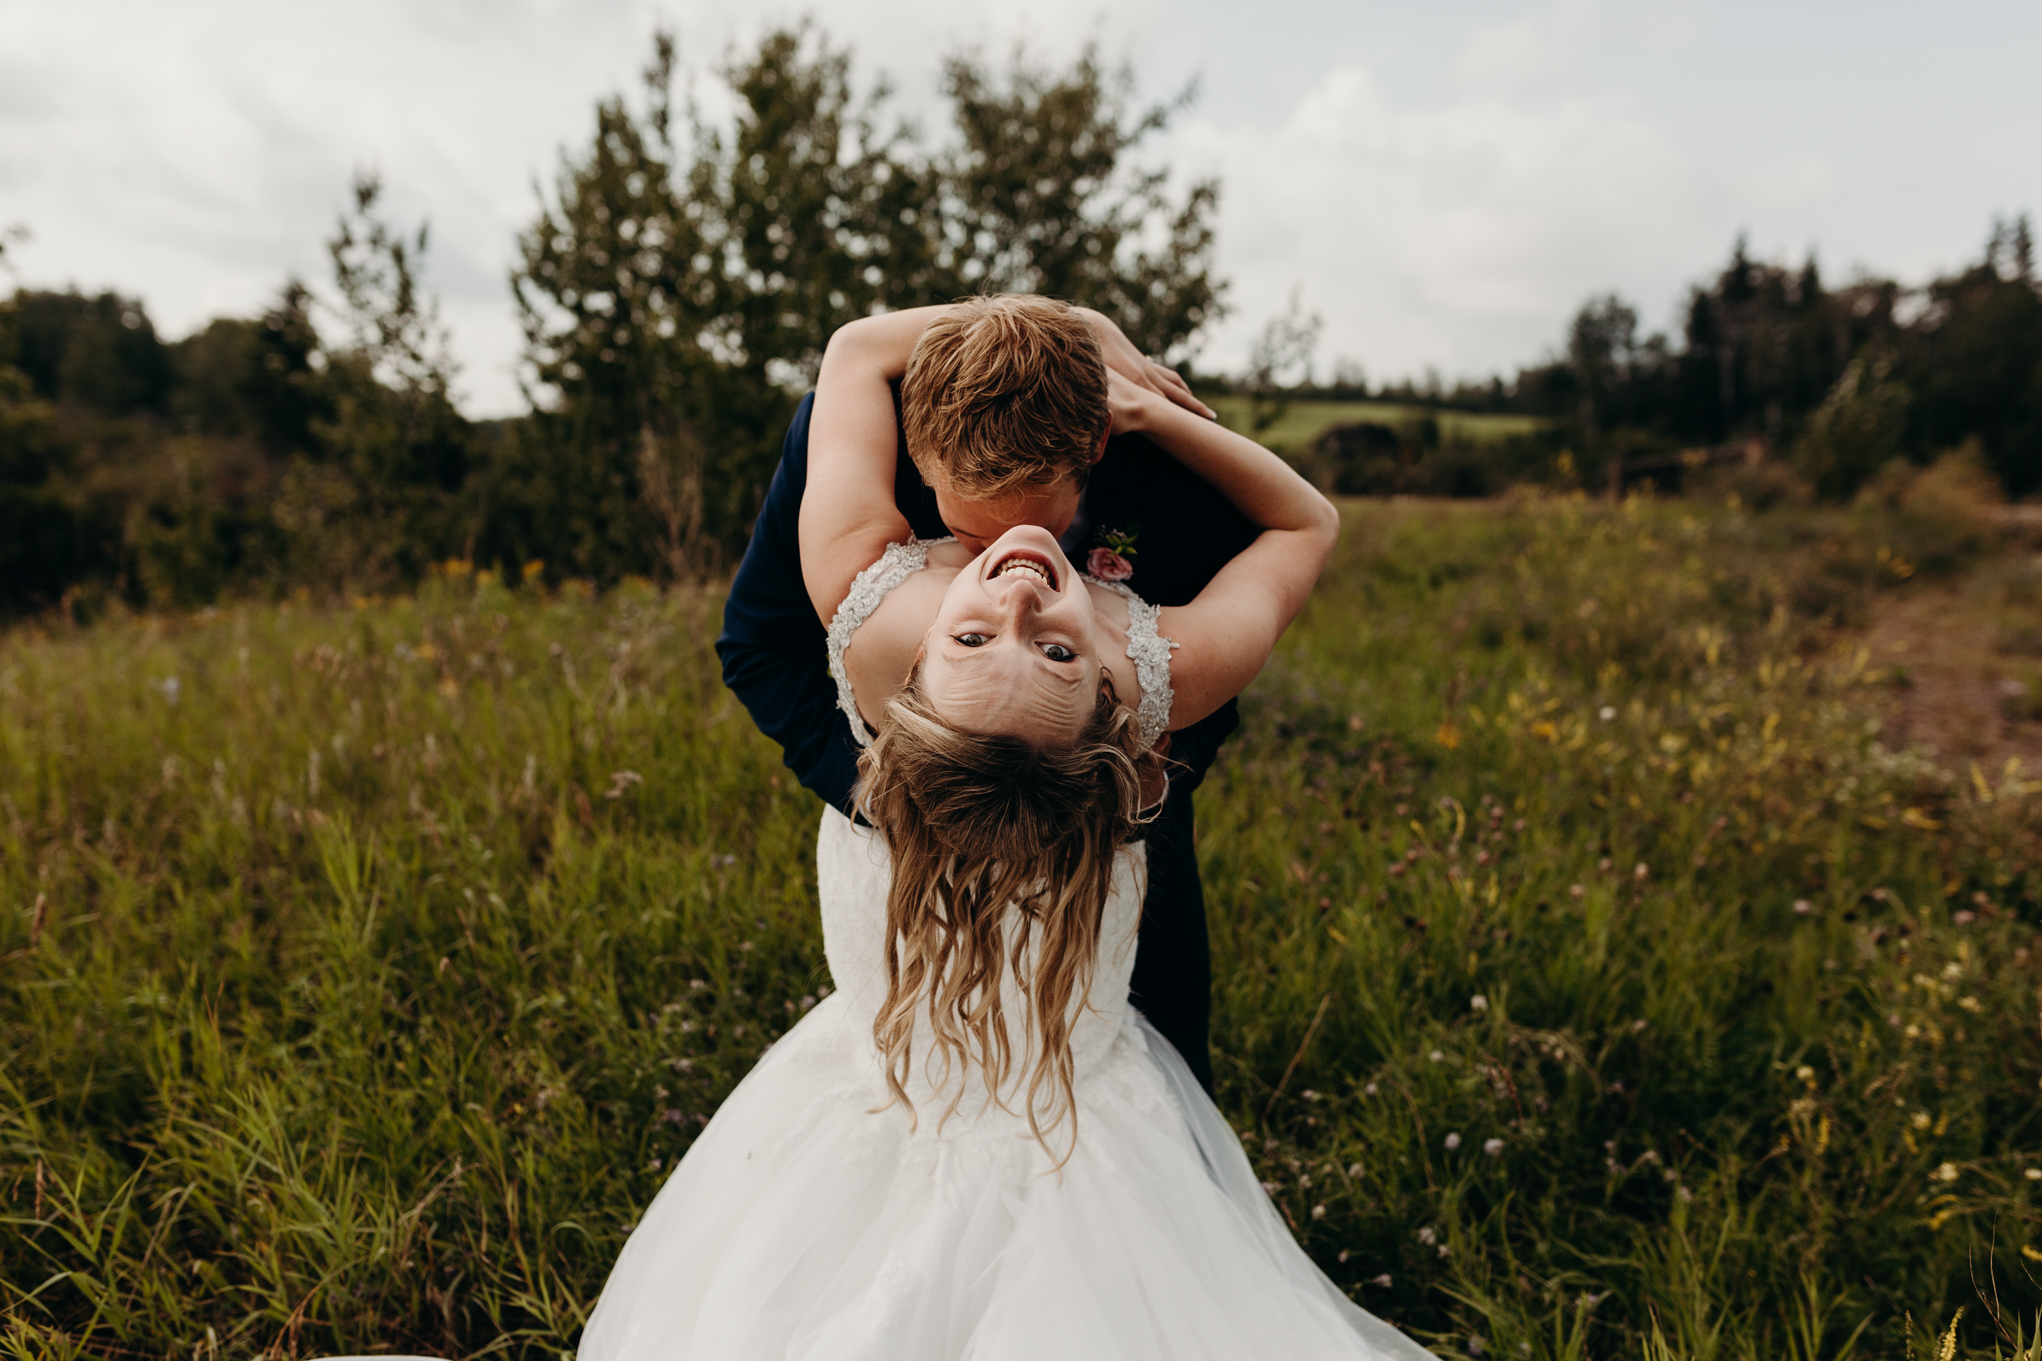 Lauren Hamm Photo | Whimsical Elopements &amp; Weddings